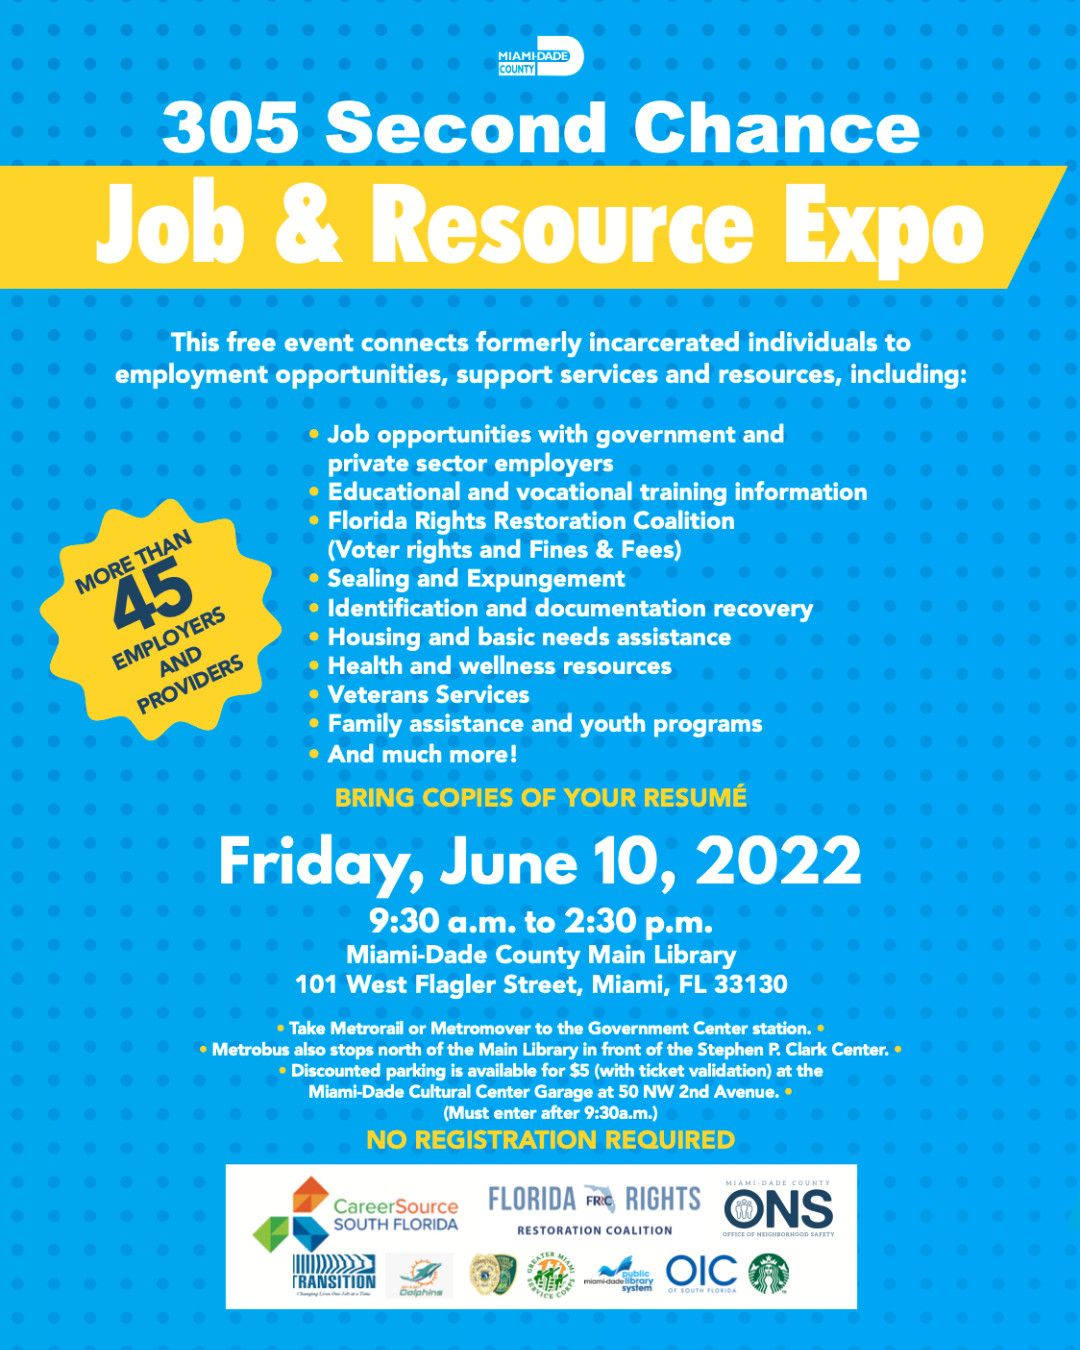 Job & Resource Expo